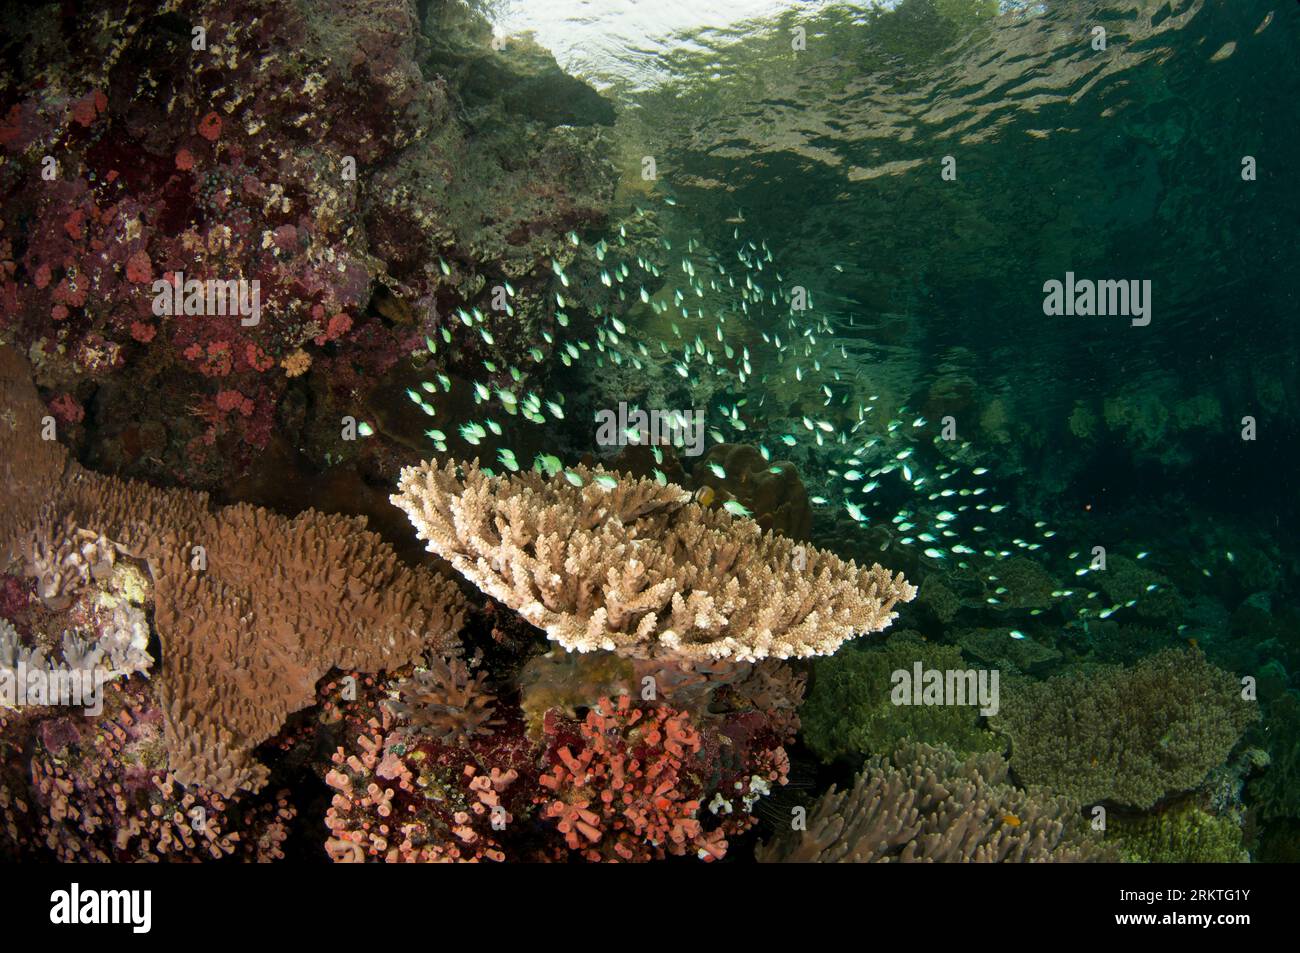 School of Chromis Damselfish, Chromis sp, in Staghorn Coral, Acropora sp, with island in background, Kerua Channel dive site, Penemu Island, Raja Ampa Stock Photo